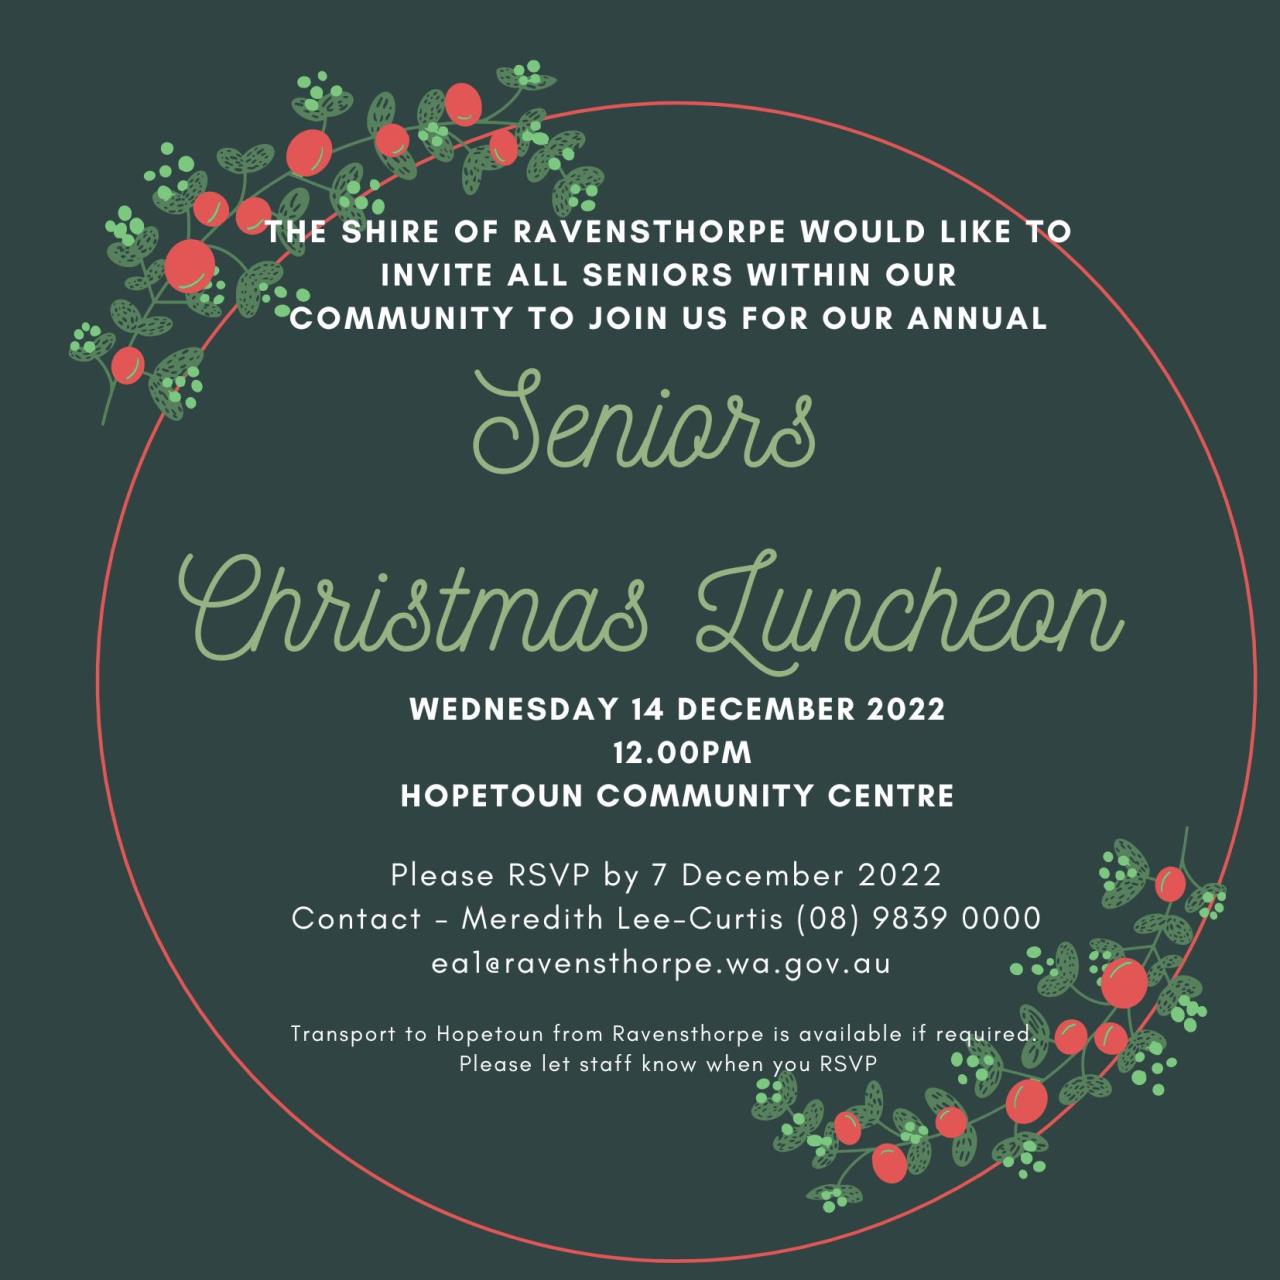 Seniors Christmas Luncheon - Wednesday, 14 December 2022